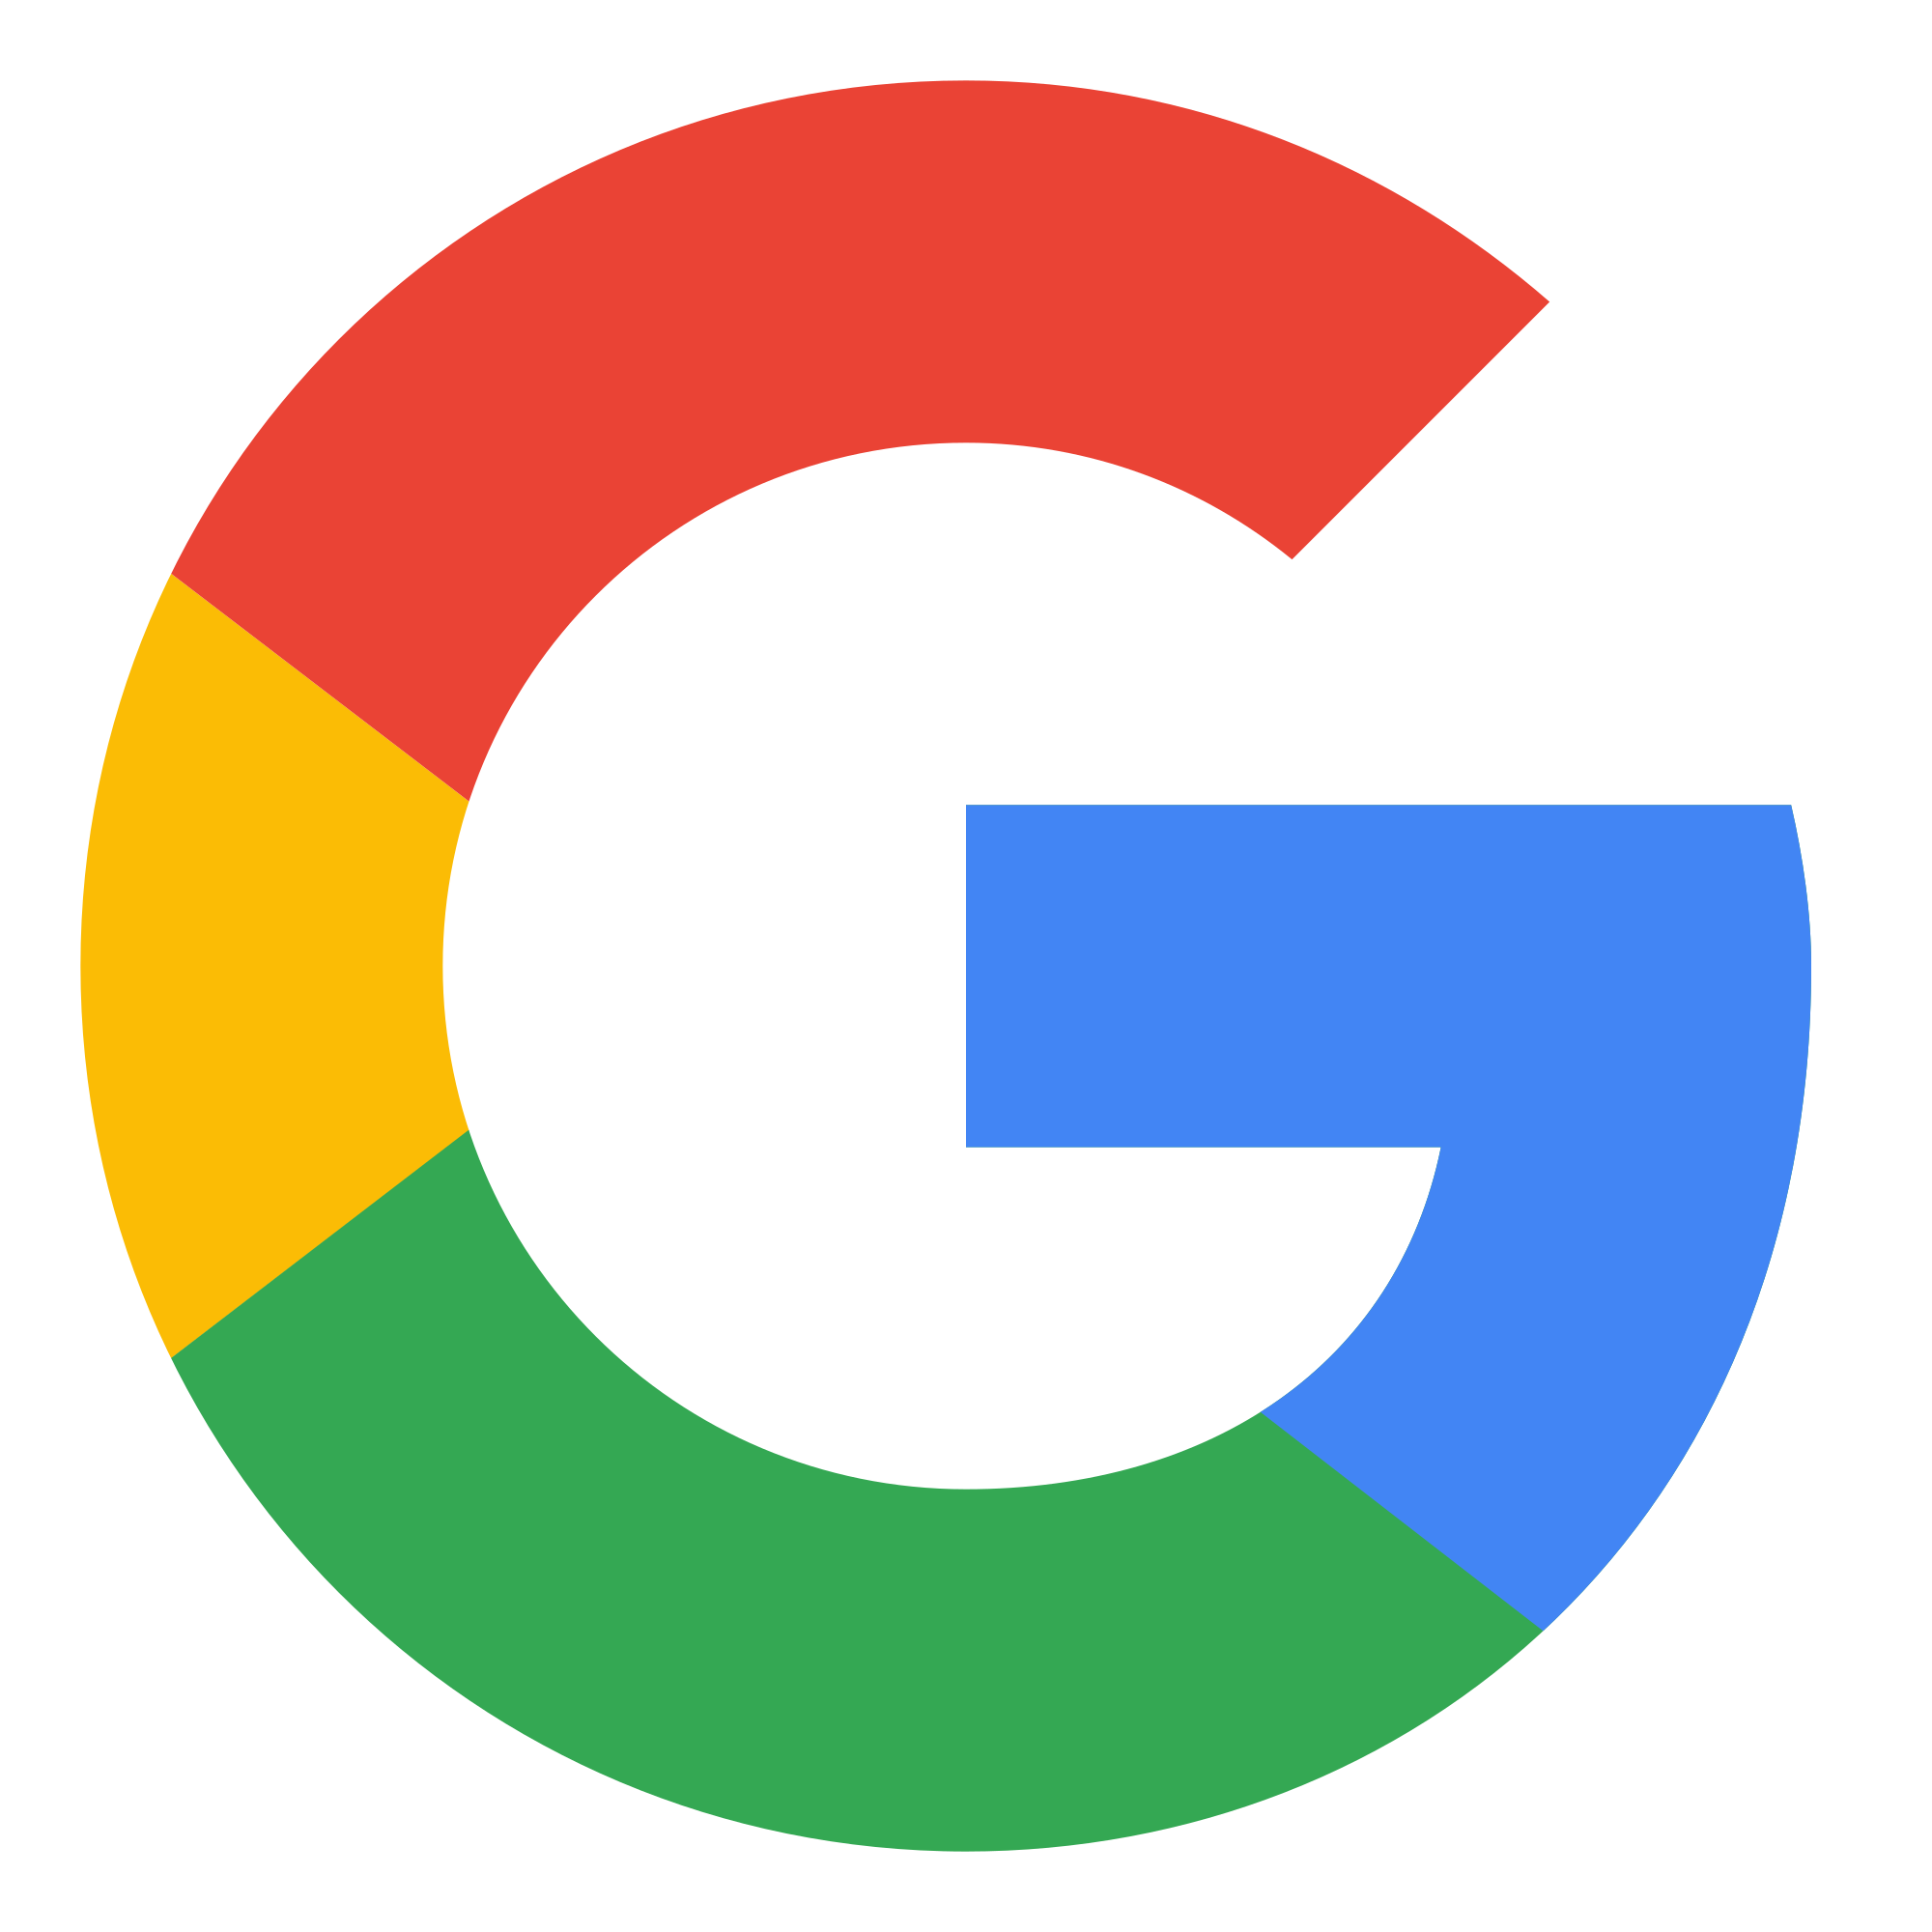 google-logo-png-open-2000.png